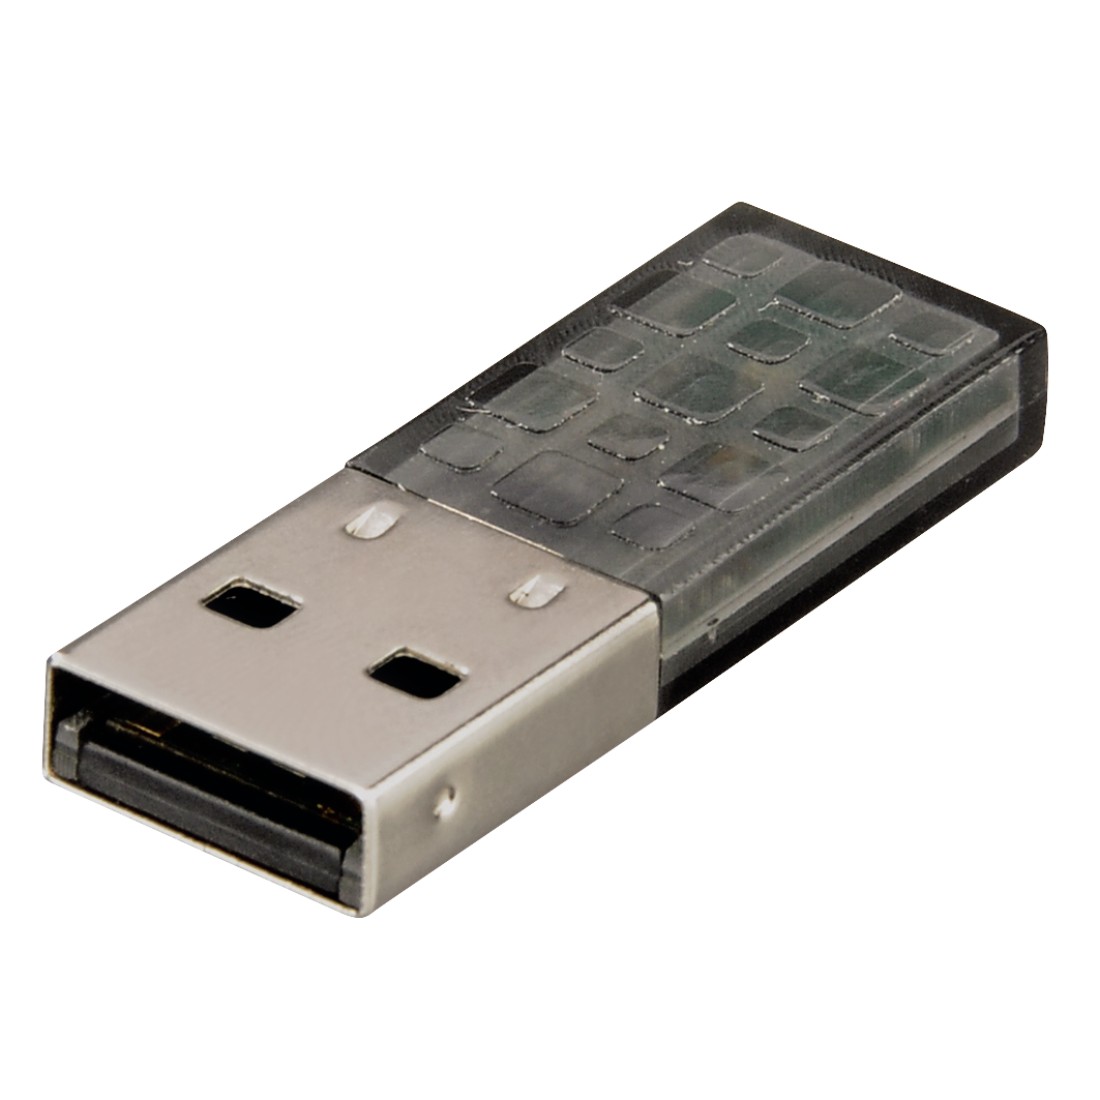 Bluetooth usb adapter драйвер. Bluetooth адаптер Hama. Hama 3.0 адаптер USB. Hama Bluetooth USB Adapter 49207. Hama Bluetooth® USB Adapter, Version 4.0.